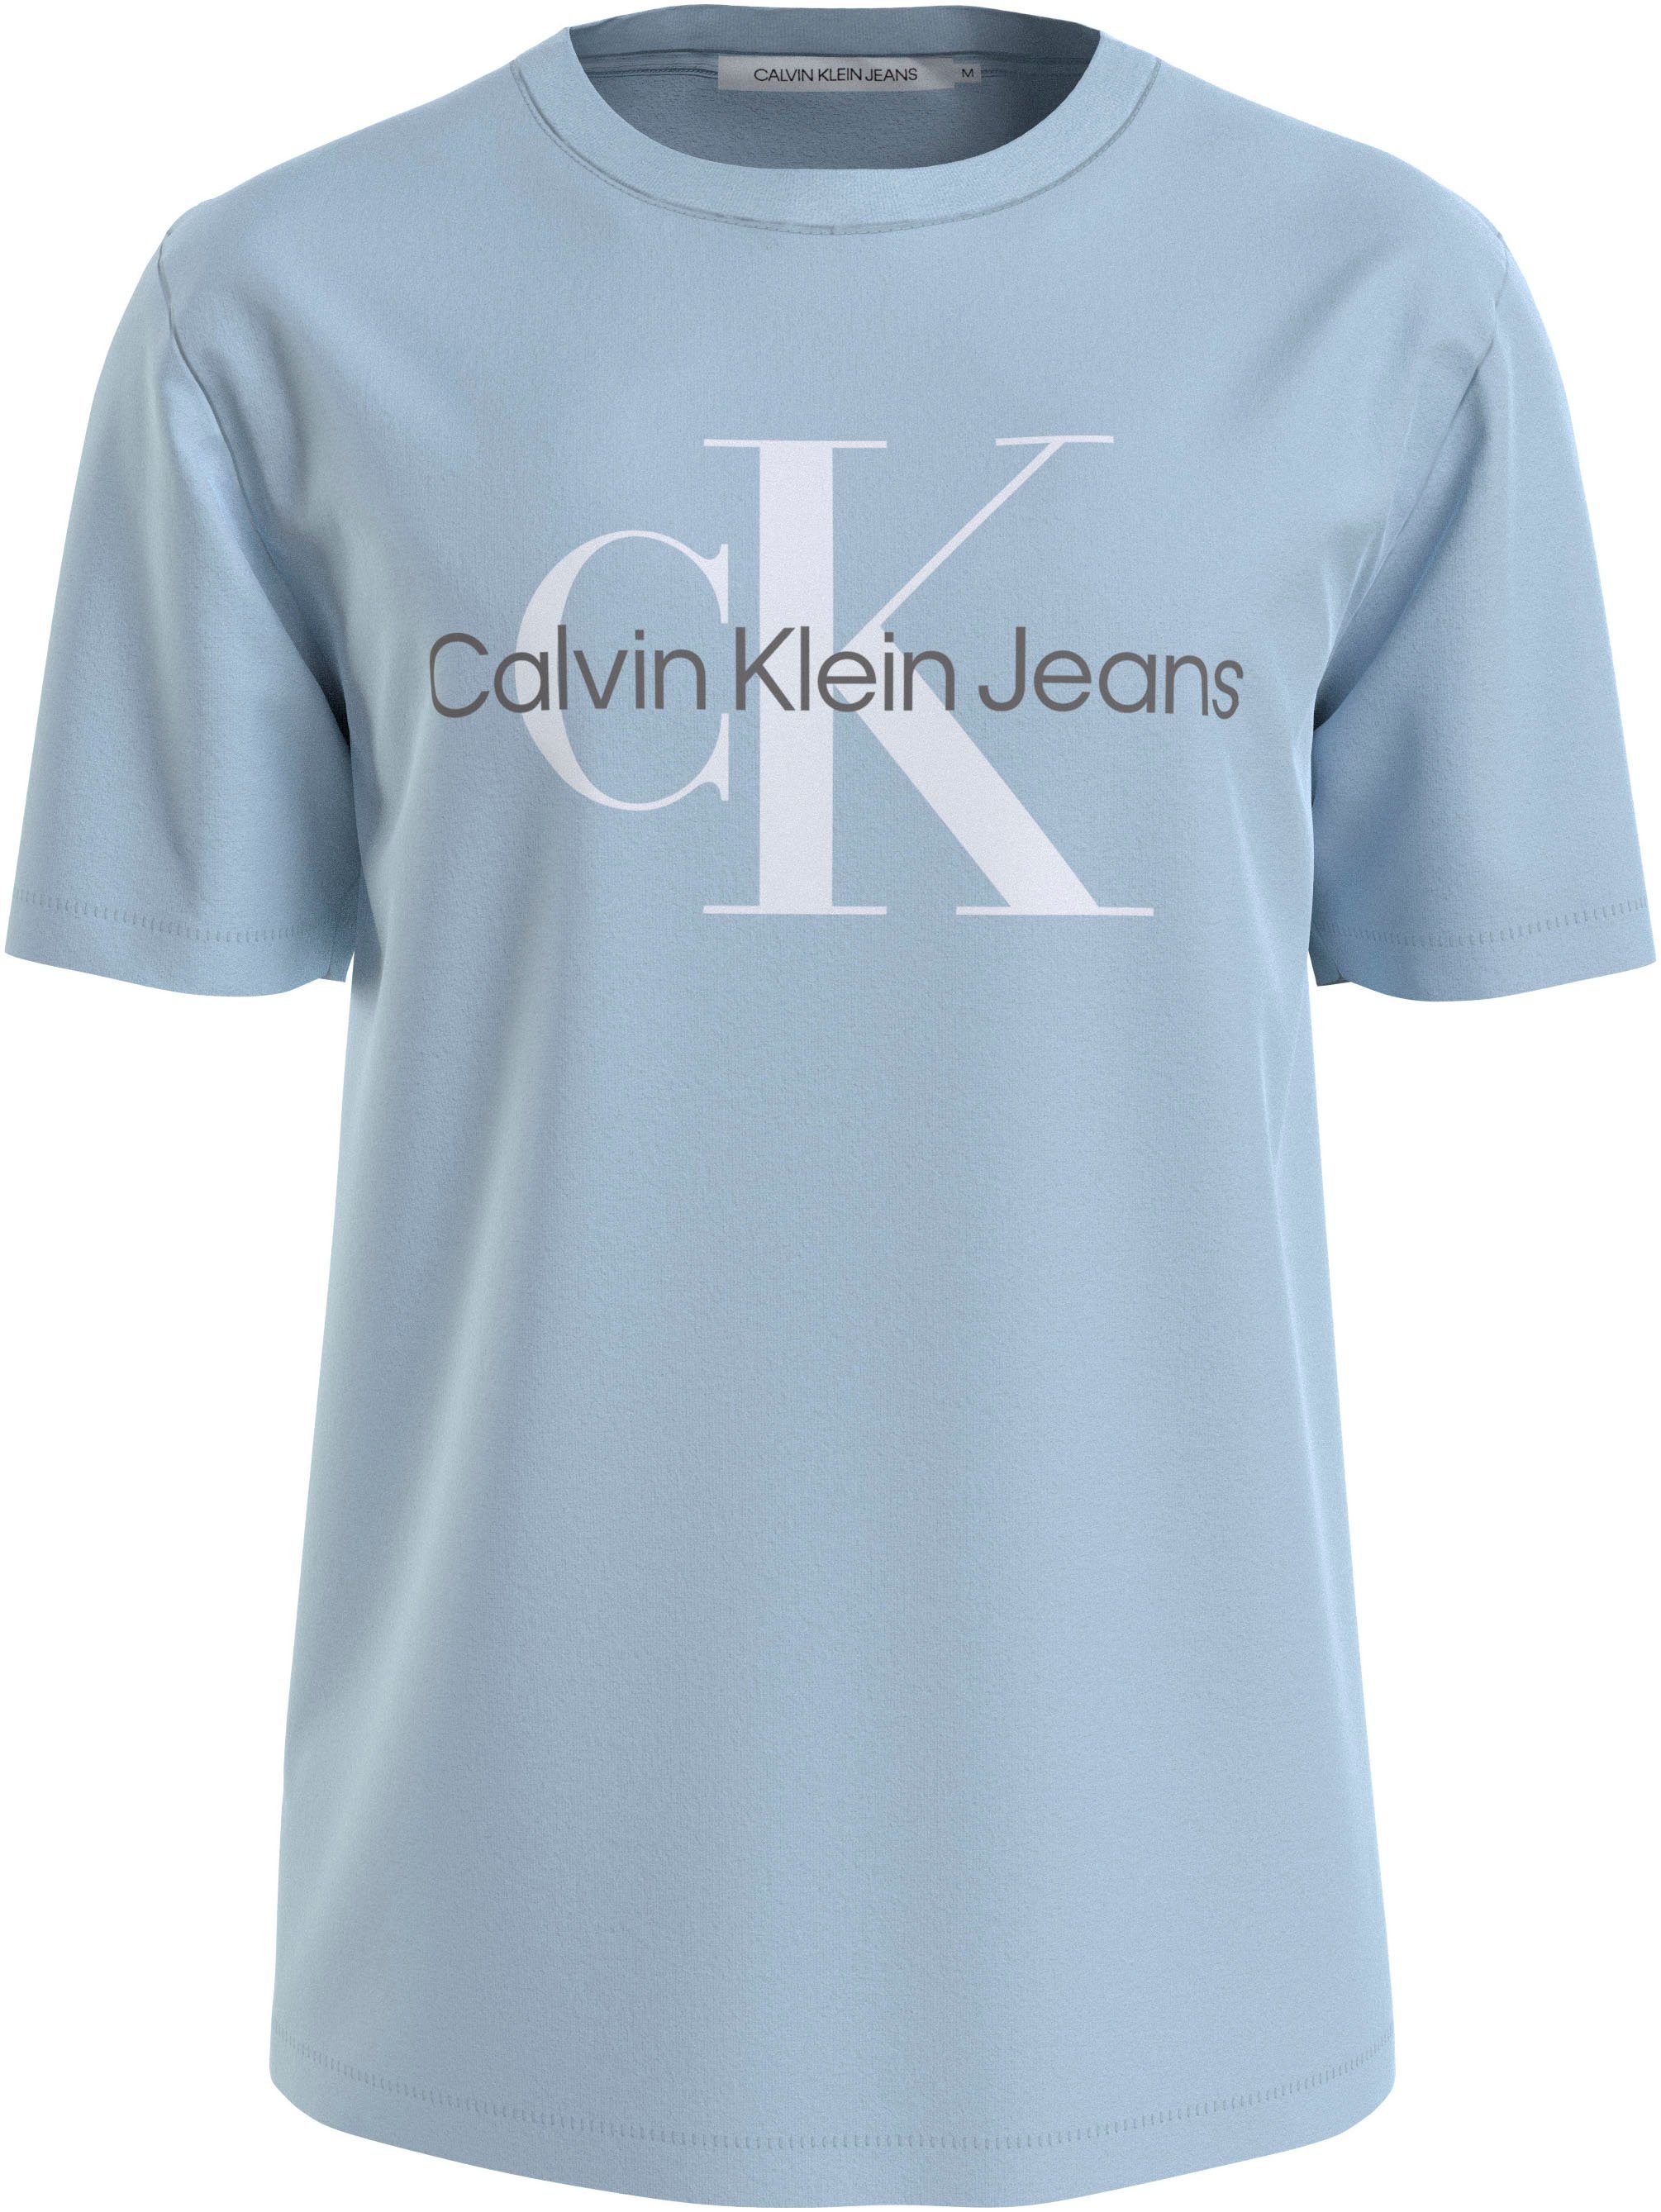 T-Shirt MONOLOGO Jeans Klein Calvin SEASONAL Blue Keepsake TEE